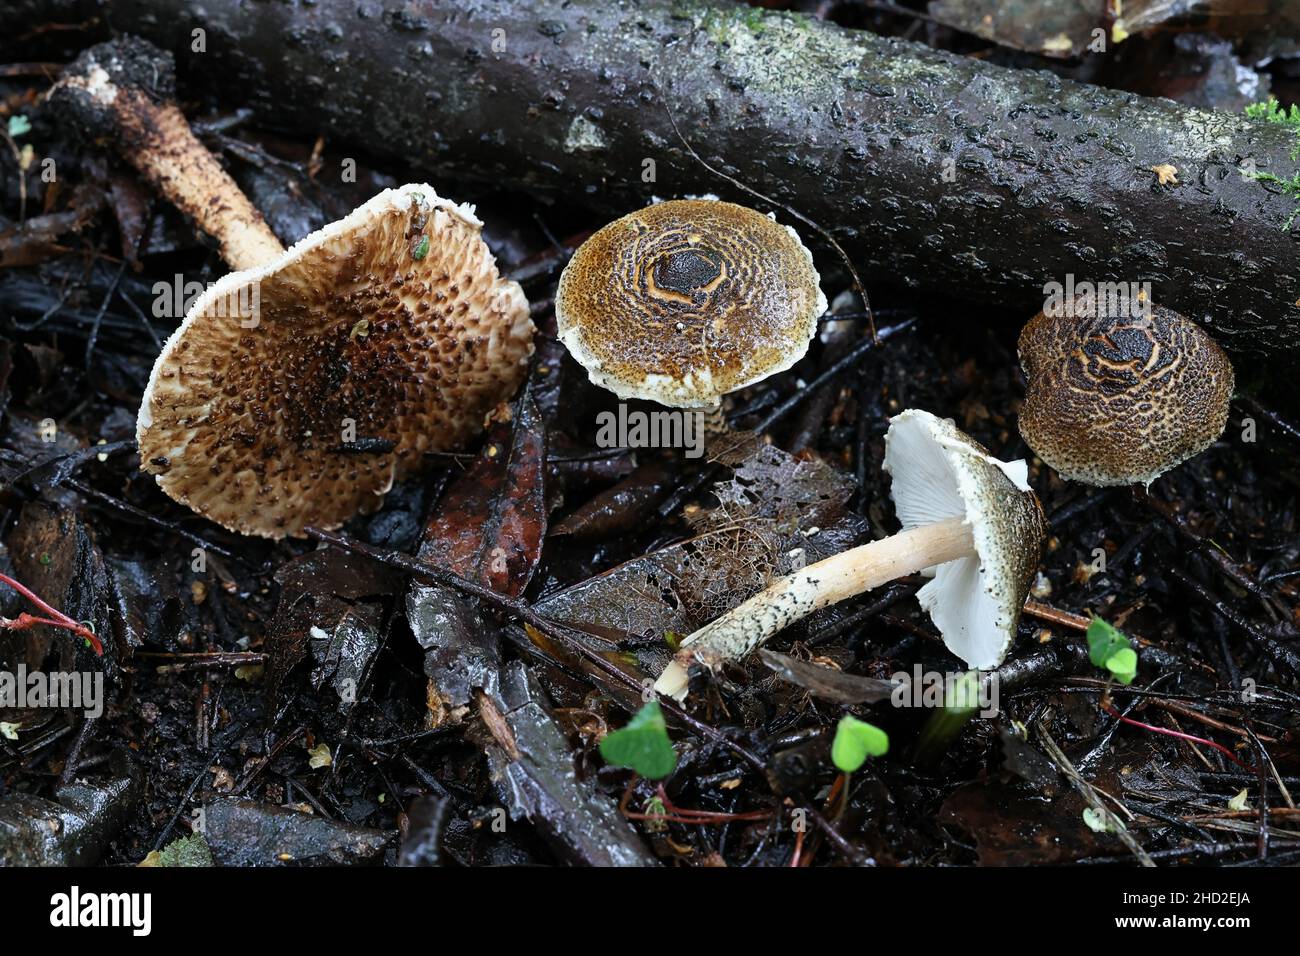 Lepiota grangei, known as the Green Dapperling, wild mushroom from Finland Stock Photo